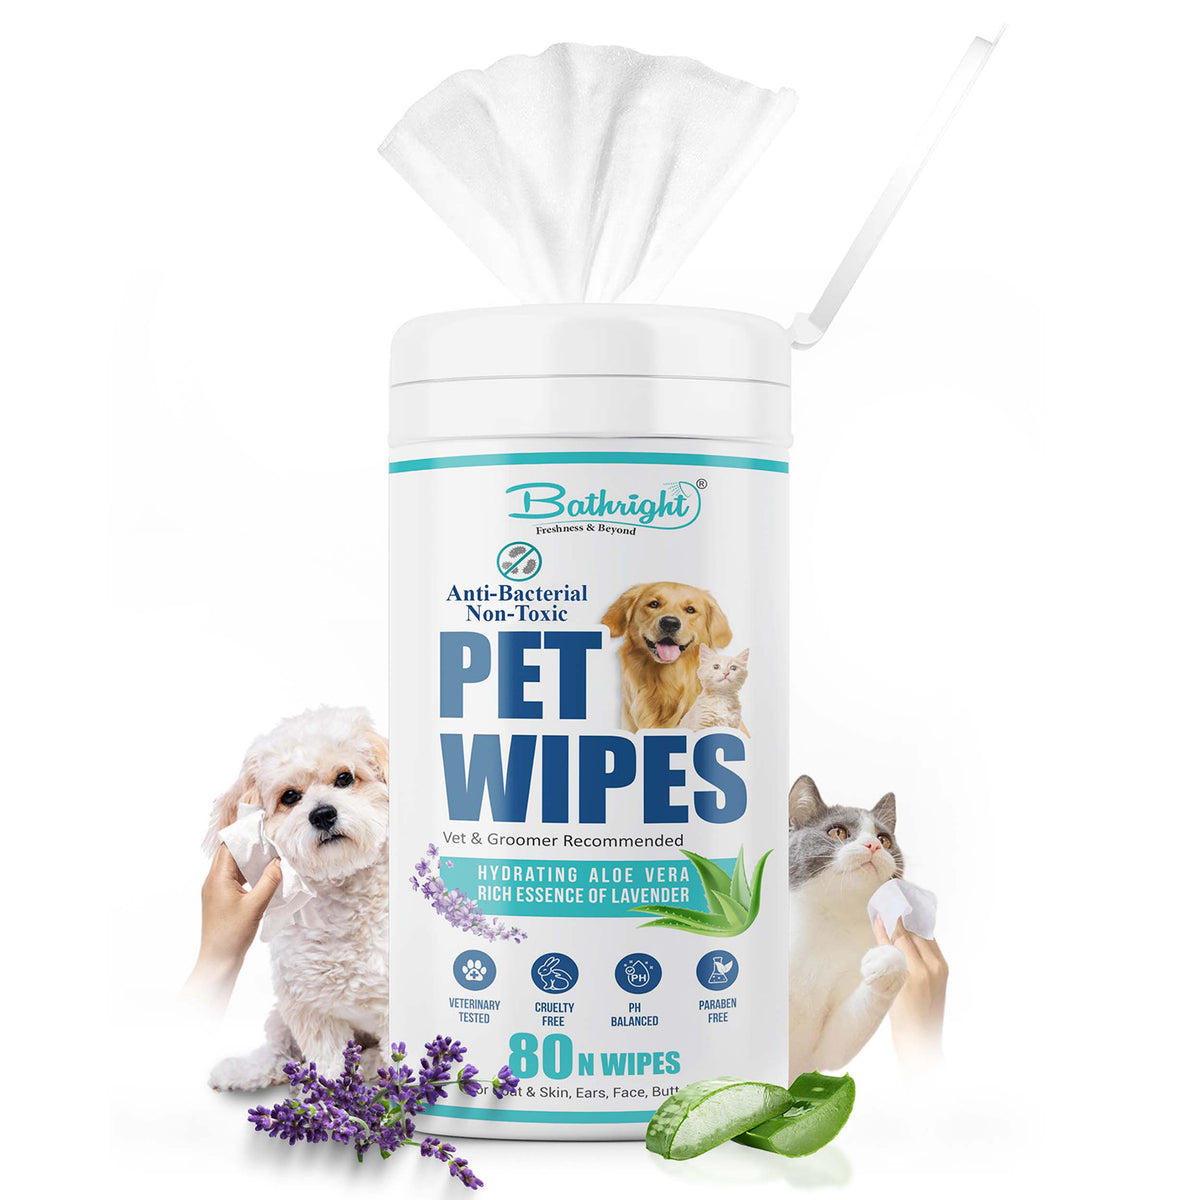 Bathright Pet Wipes | 80 N Cat & Dog Wipes | Aloe Vera & Fresh Lavender | pH Balance | Dry Bath, Ear & Paw | Wet Wipes for Cleaning & Deodorizing | Hygiene Cleaning Essentials, 15 x 20 cm